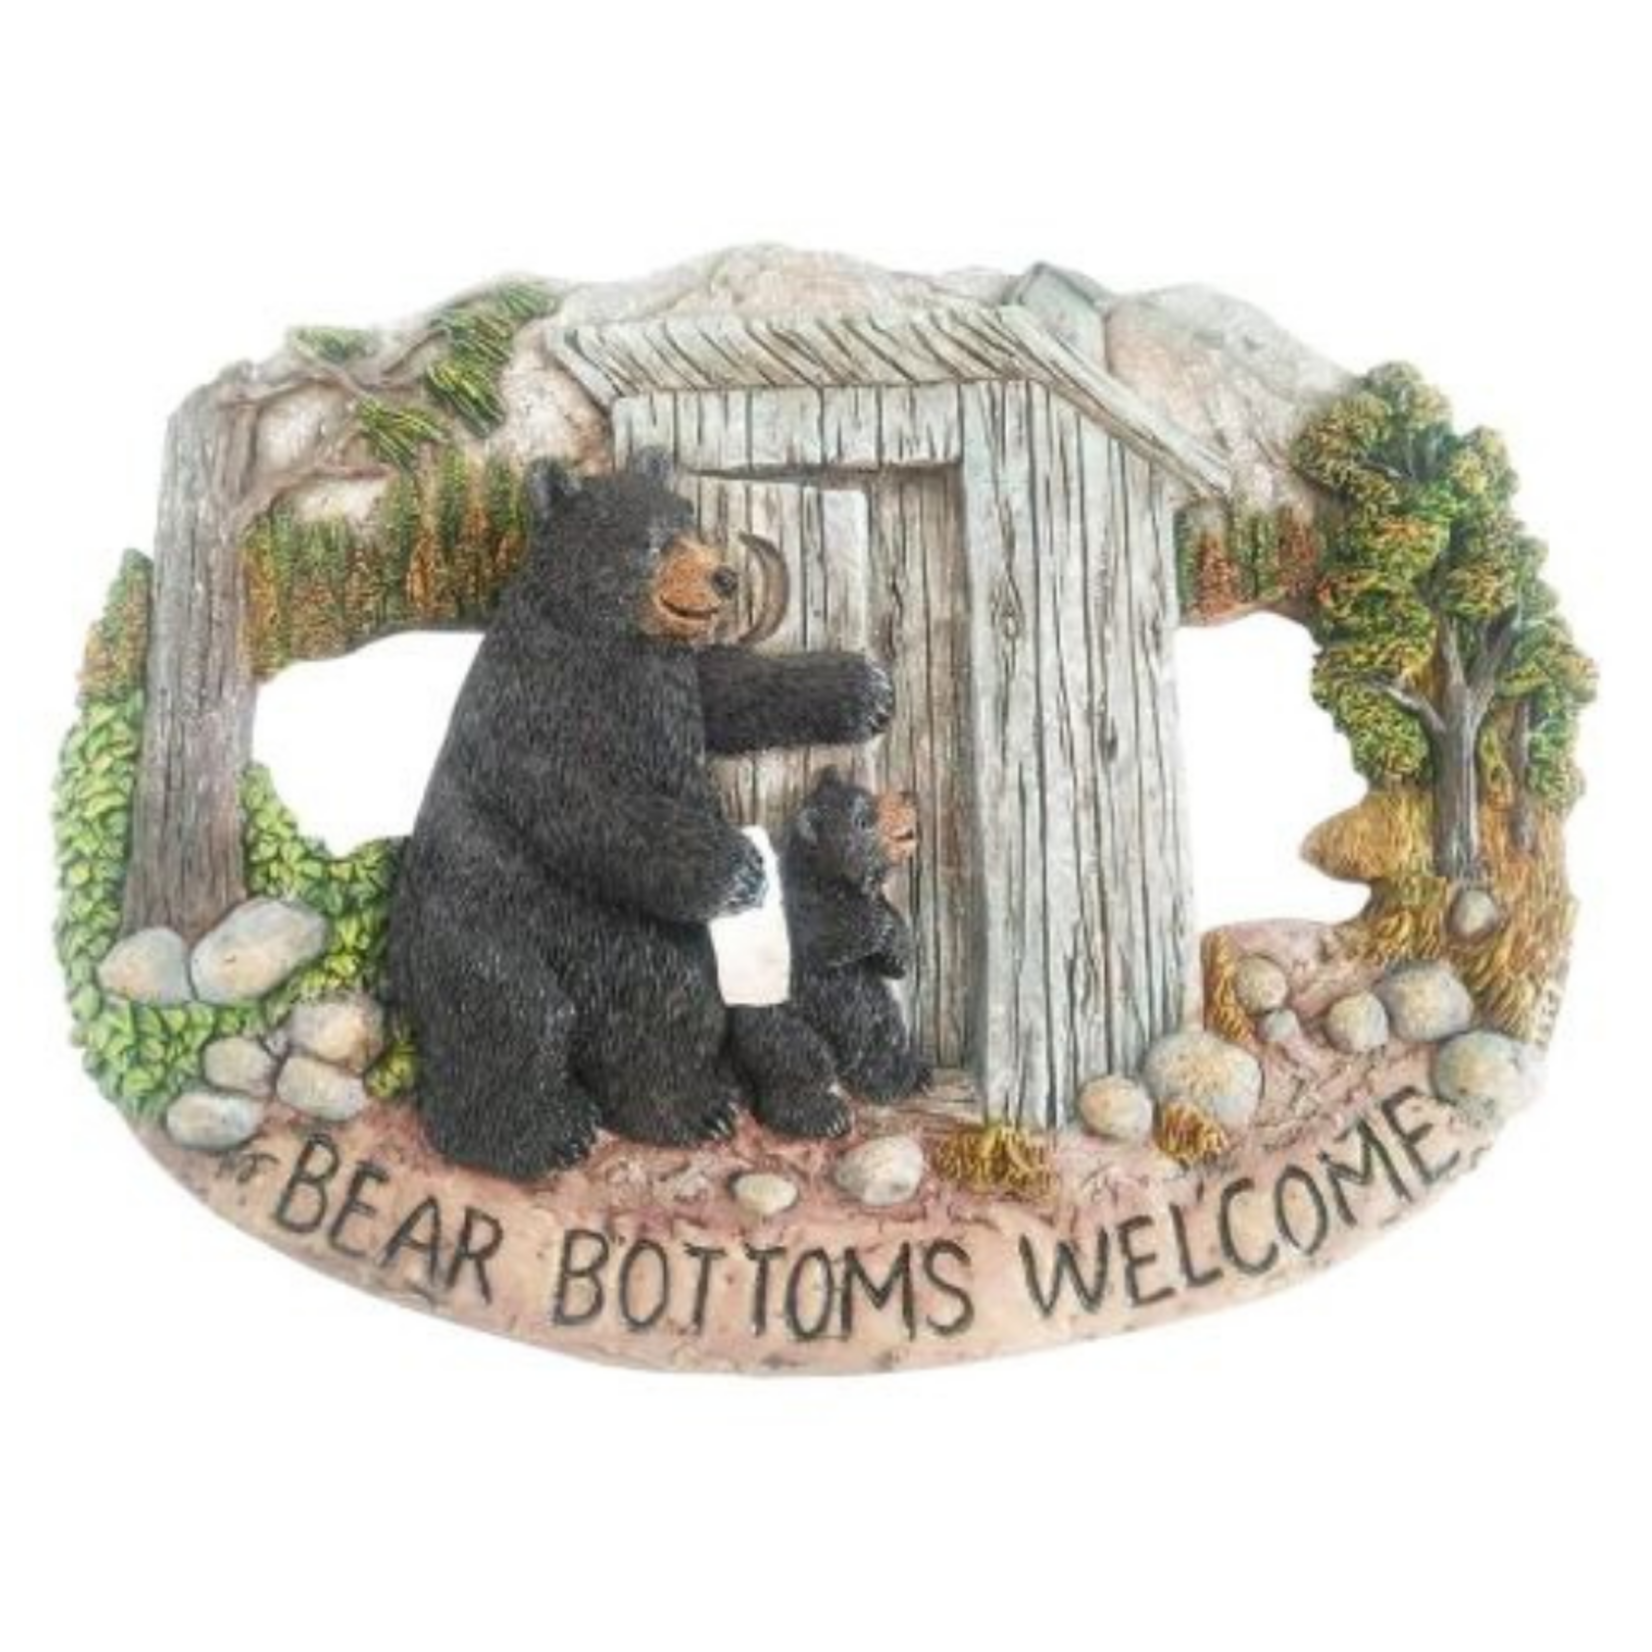 Pine Ridge Bear Bottoms Welcome Plaque